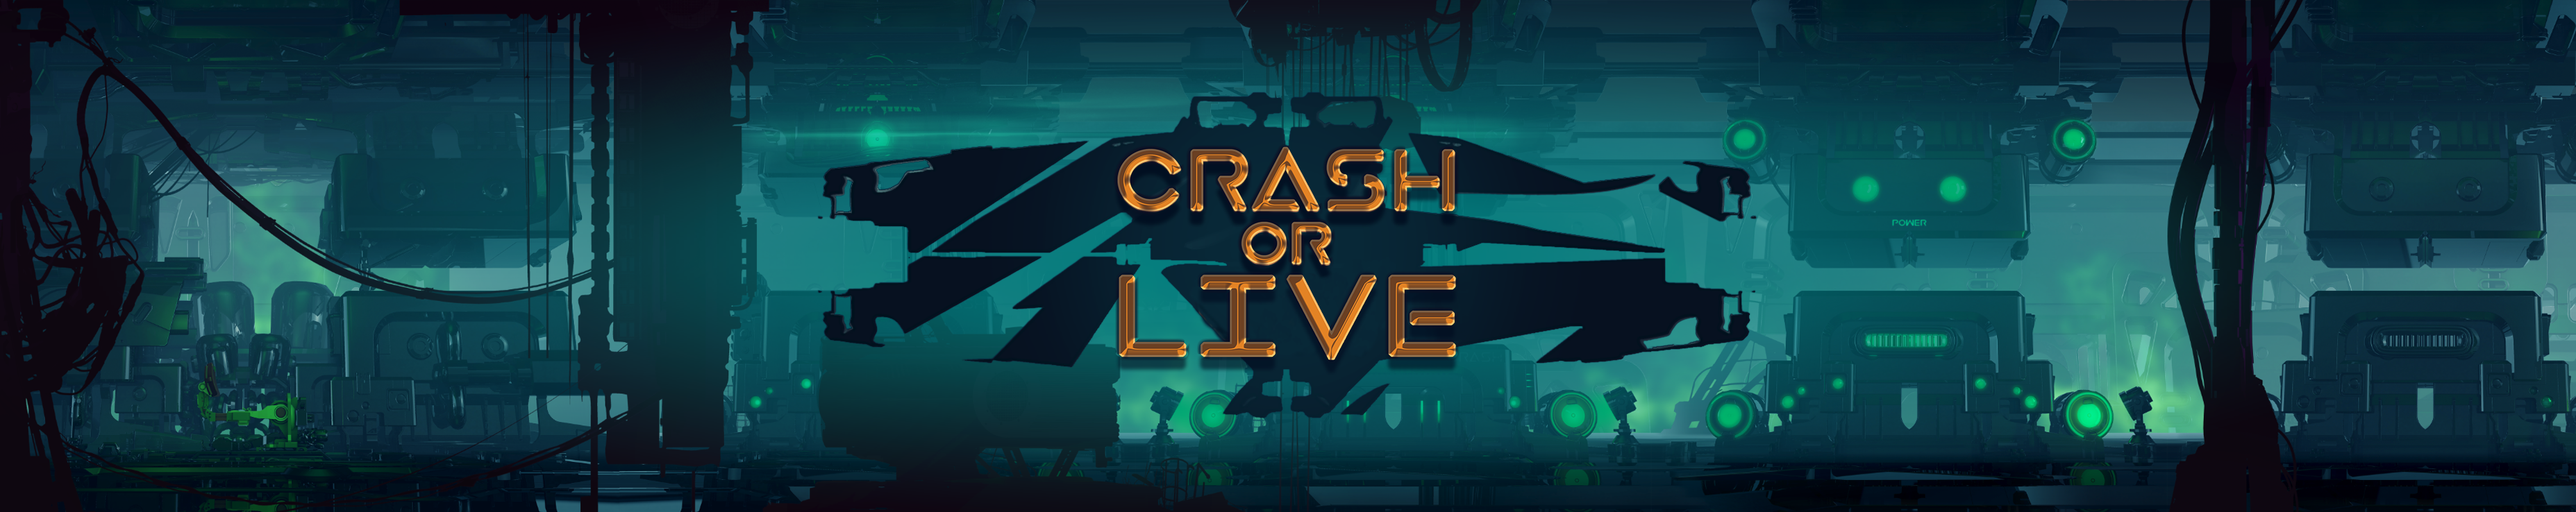 Crash or live